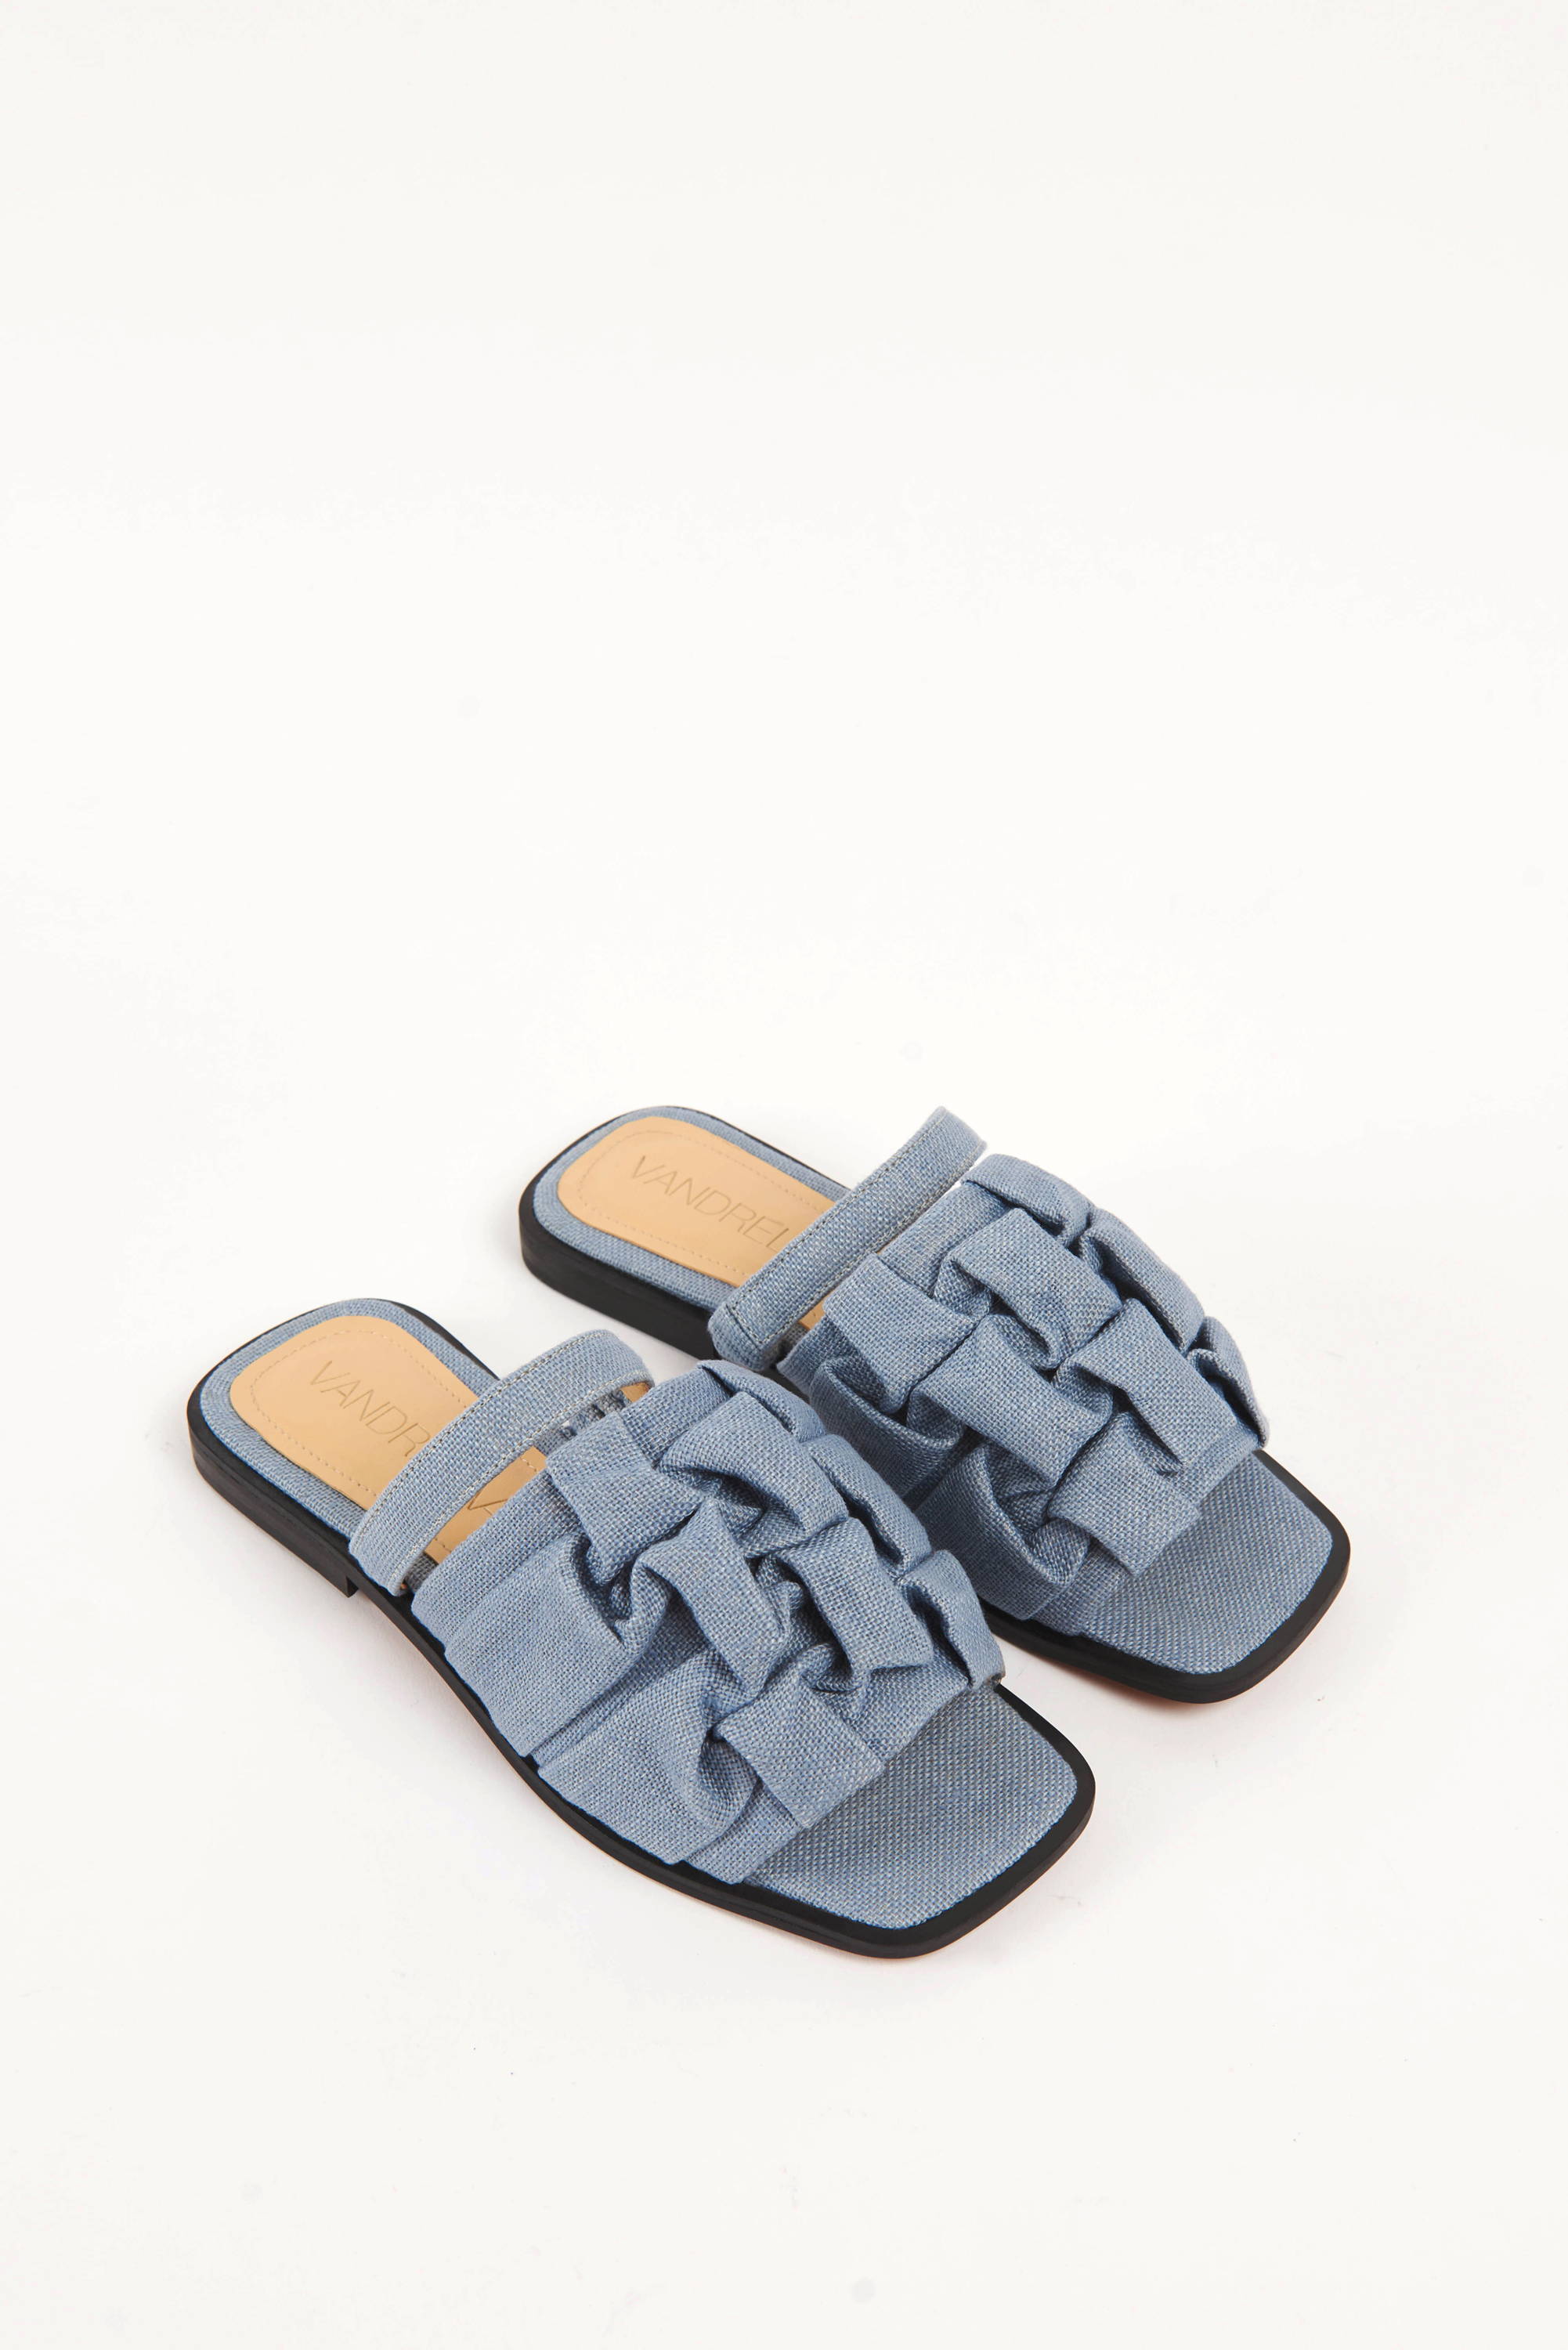 Vandrelaar vegan Simone sandal in  powder blue linen featuring canadian smocking detailing and a square toe